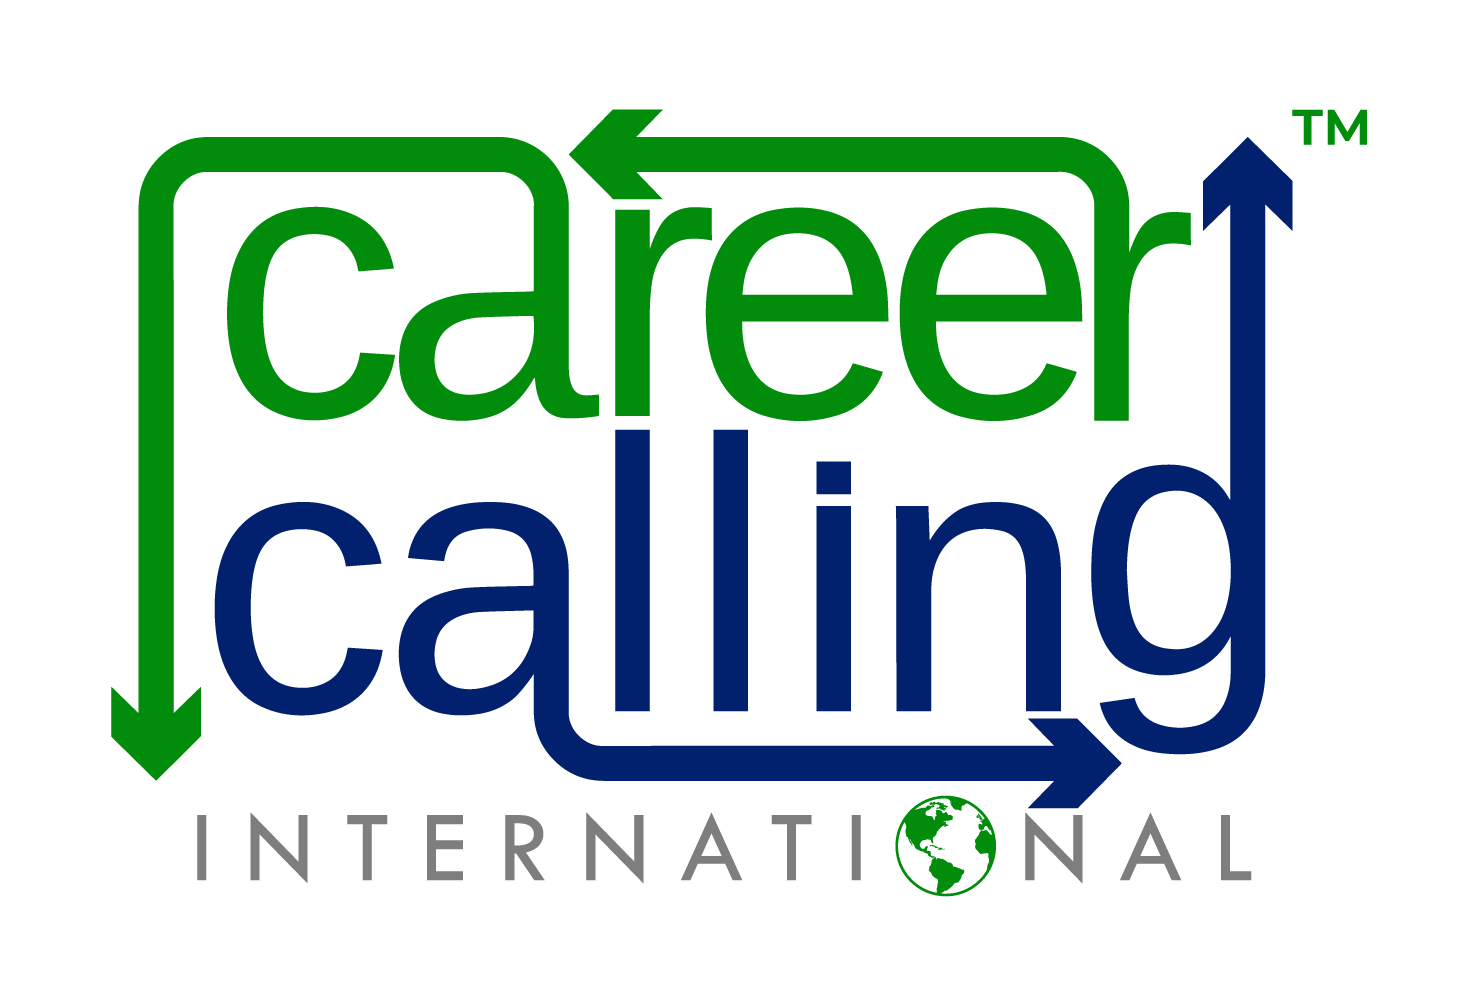 Career Calling International